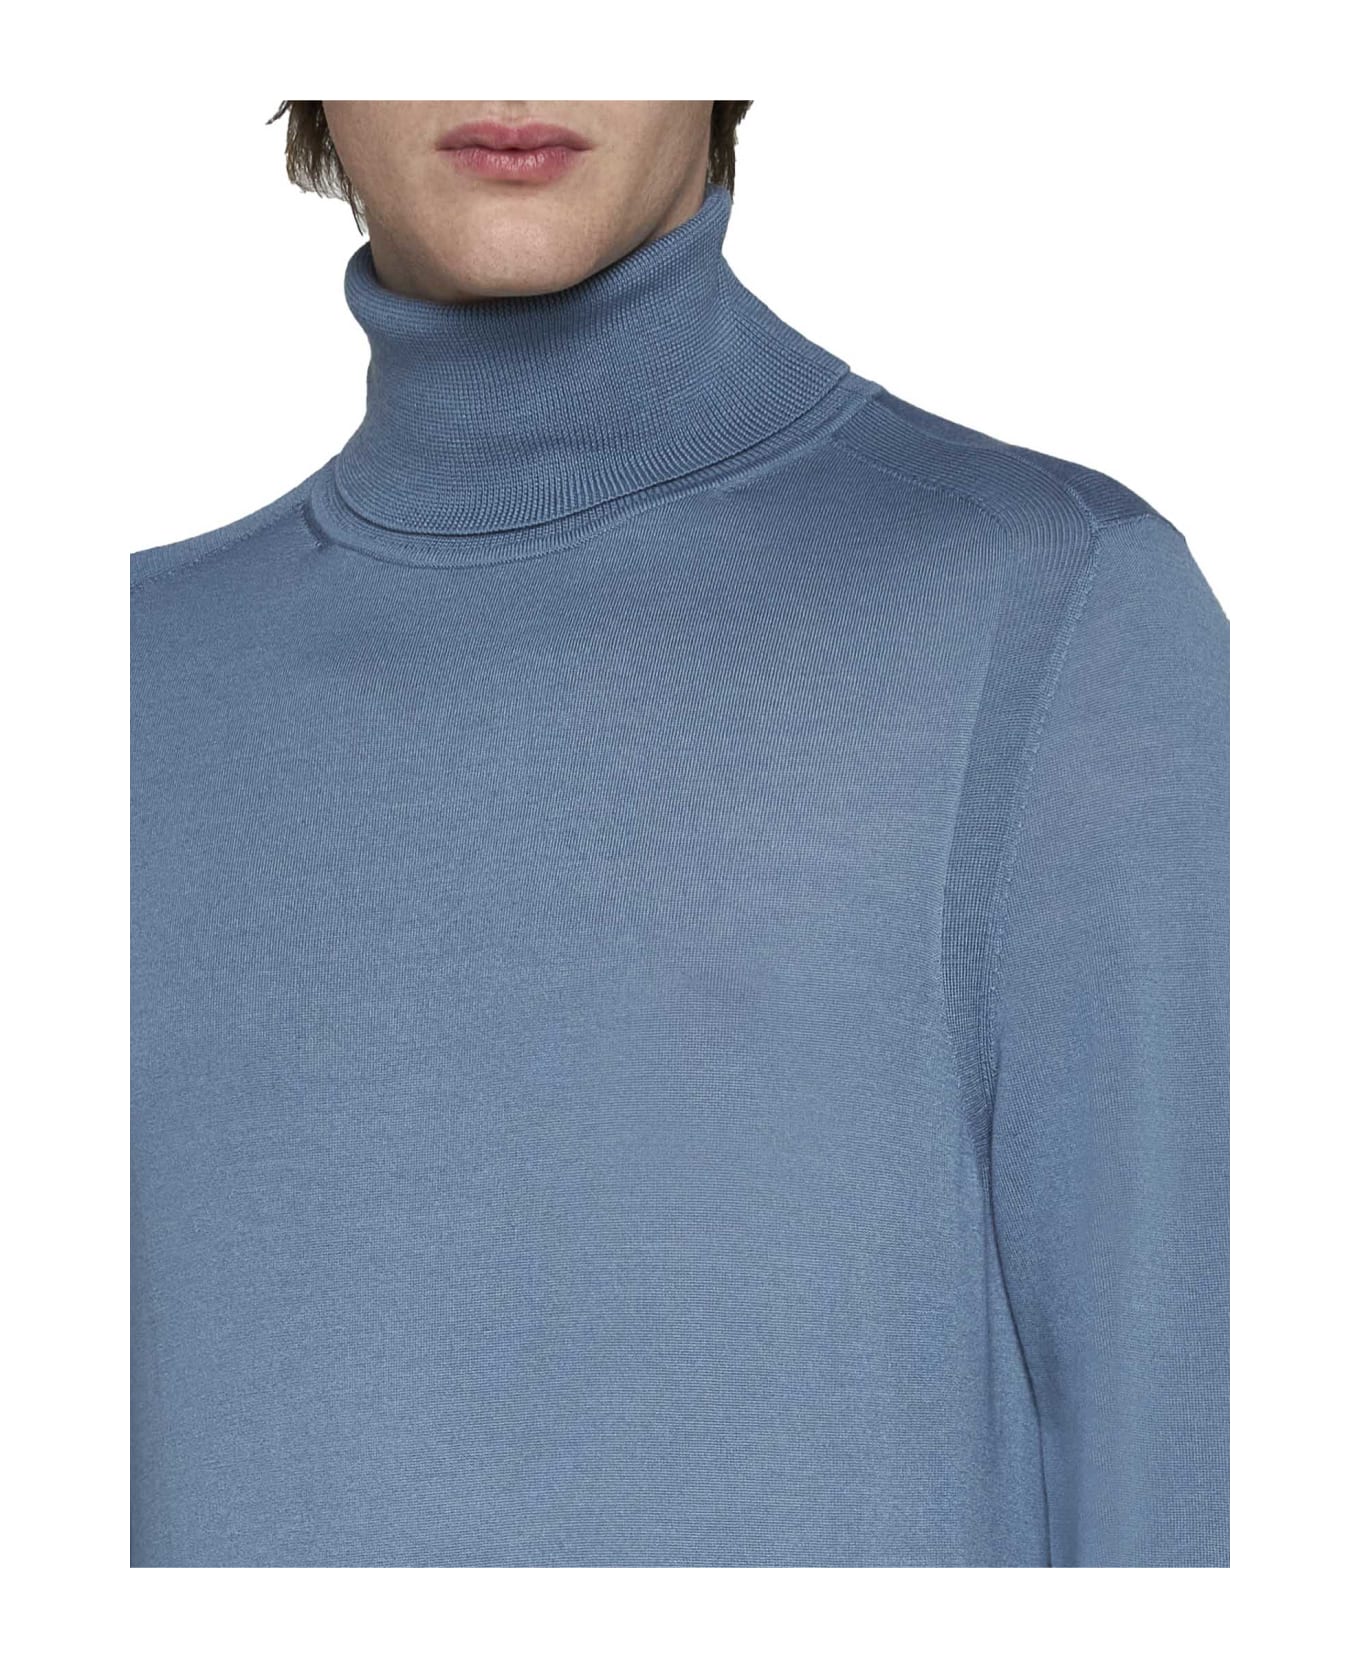 Paul Smith Sweater - Turquoise ニットウェア